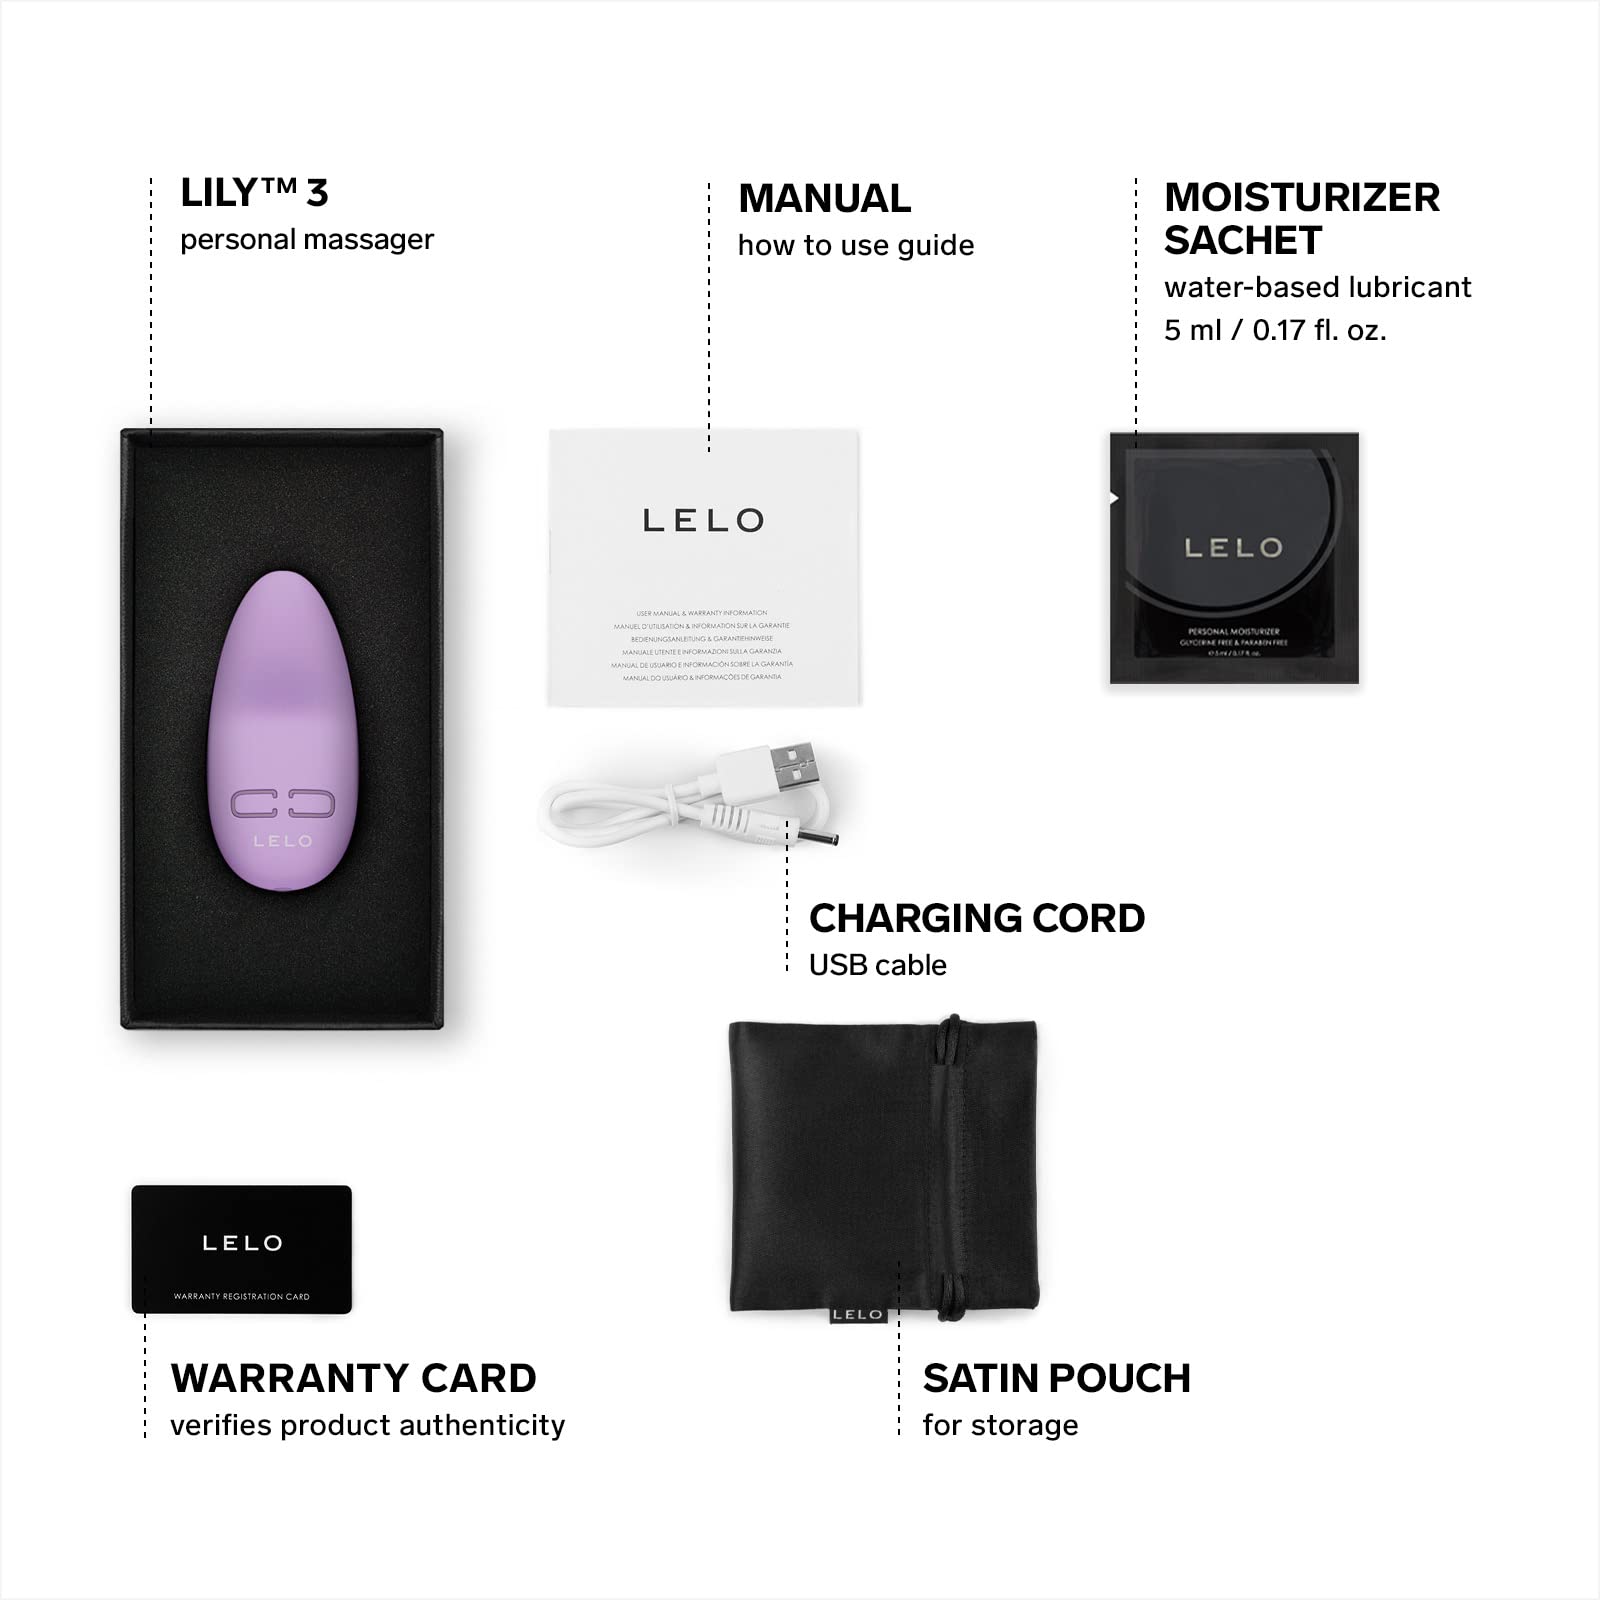 LELO - Lily 3 Mini Vibrating Personal Massager - Calm Lavender